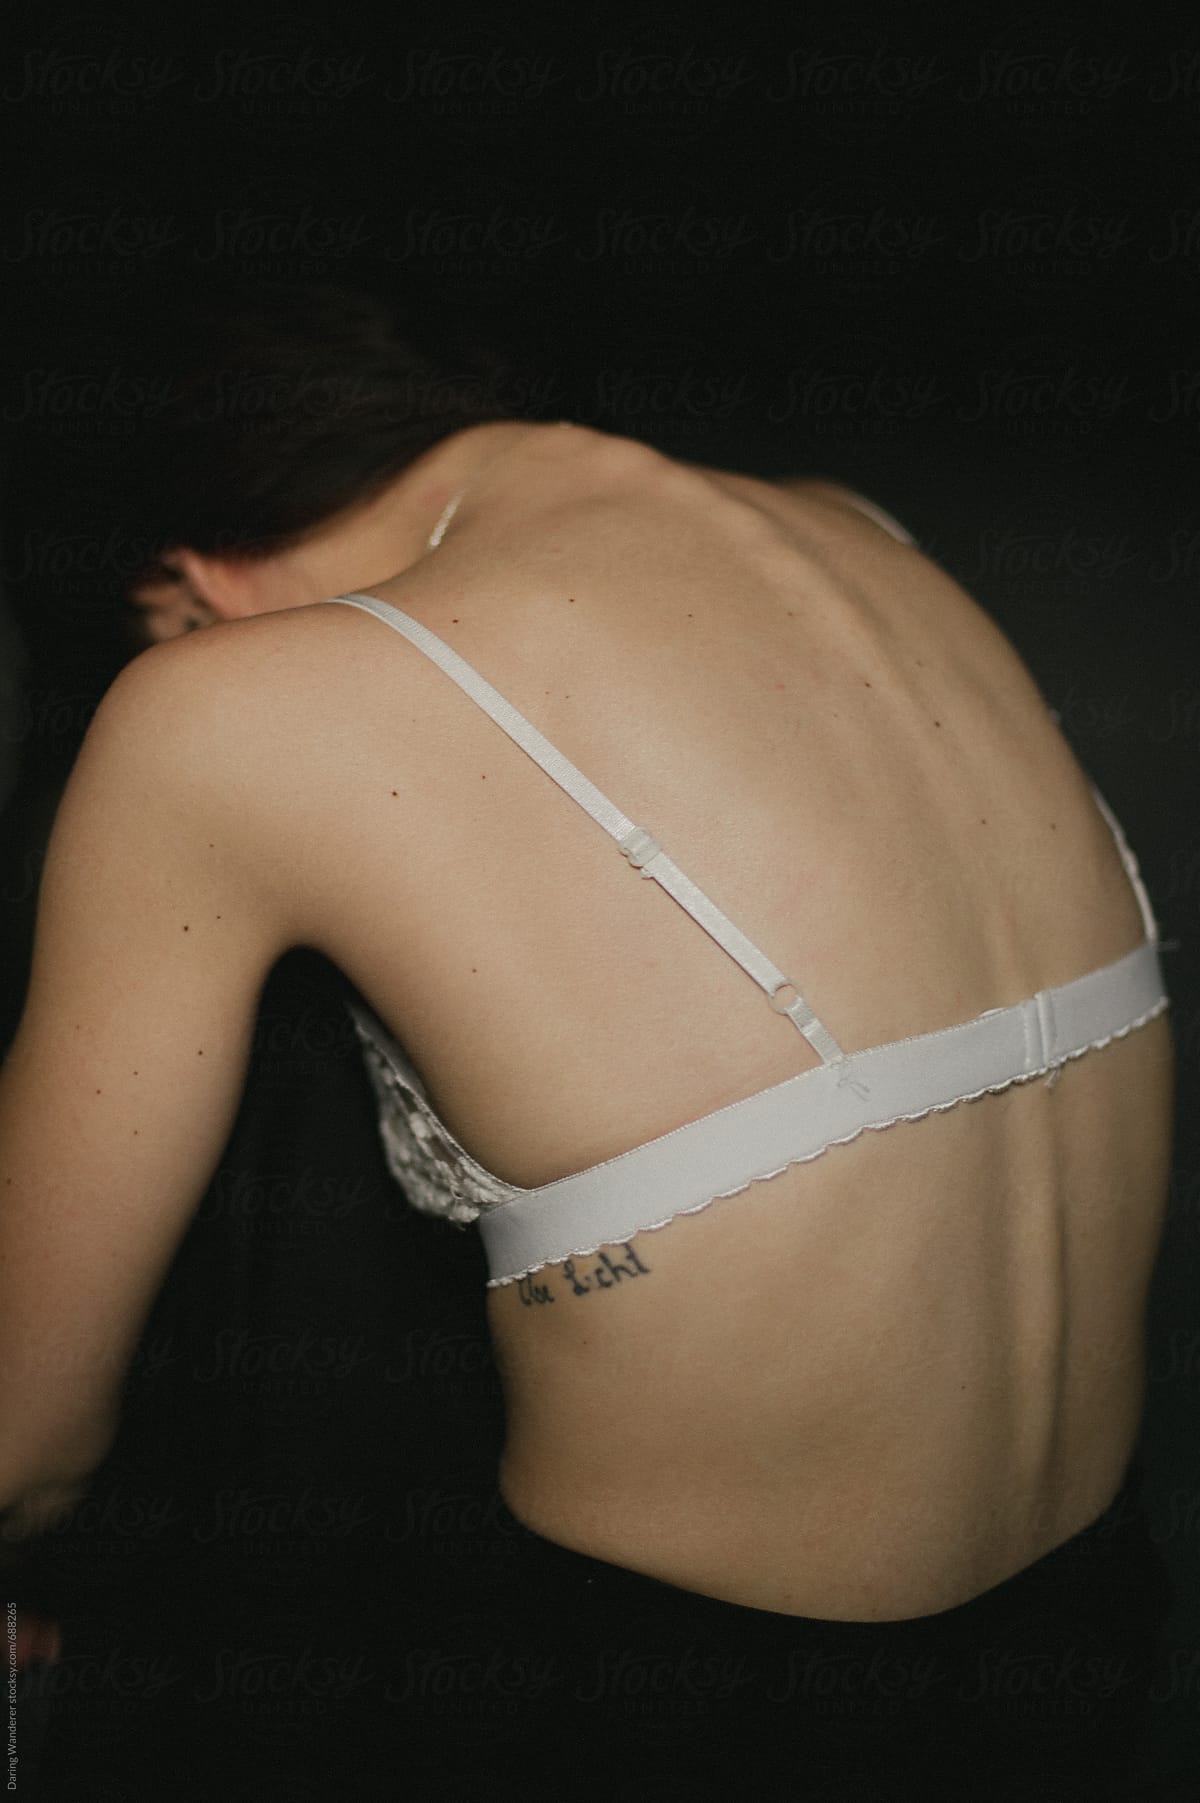 Skinny Girl Wearing White Bra With Boney Spine Showing by Stocksy  Contributor Jess Craven - Stocksy